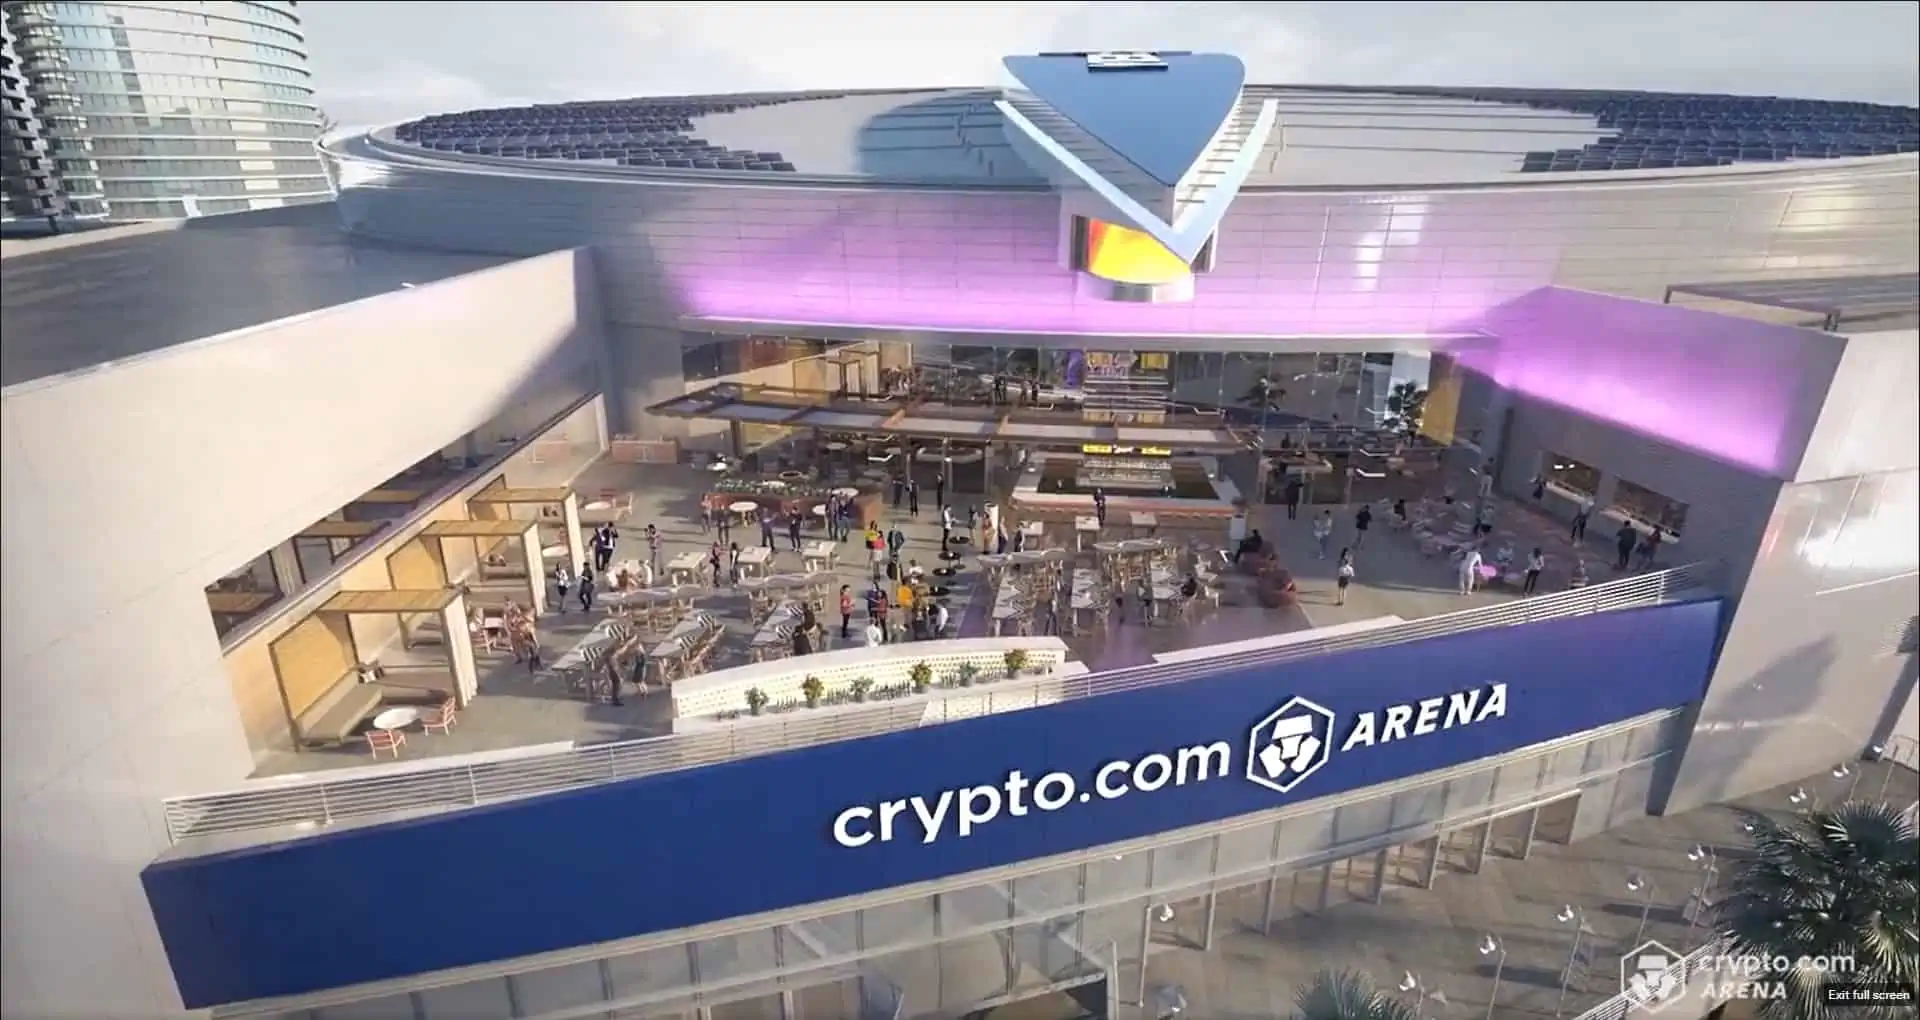 CryptoCom Announces “Nine-Figure Investment” To Overhaul its Stadium